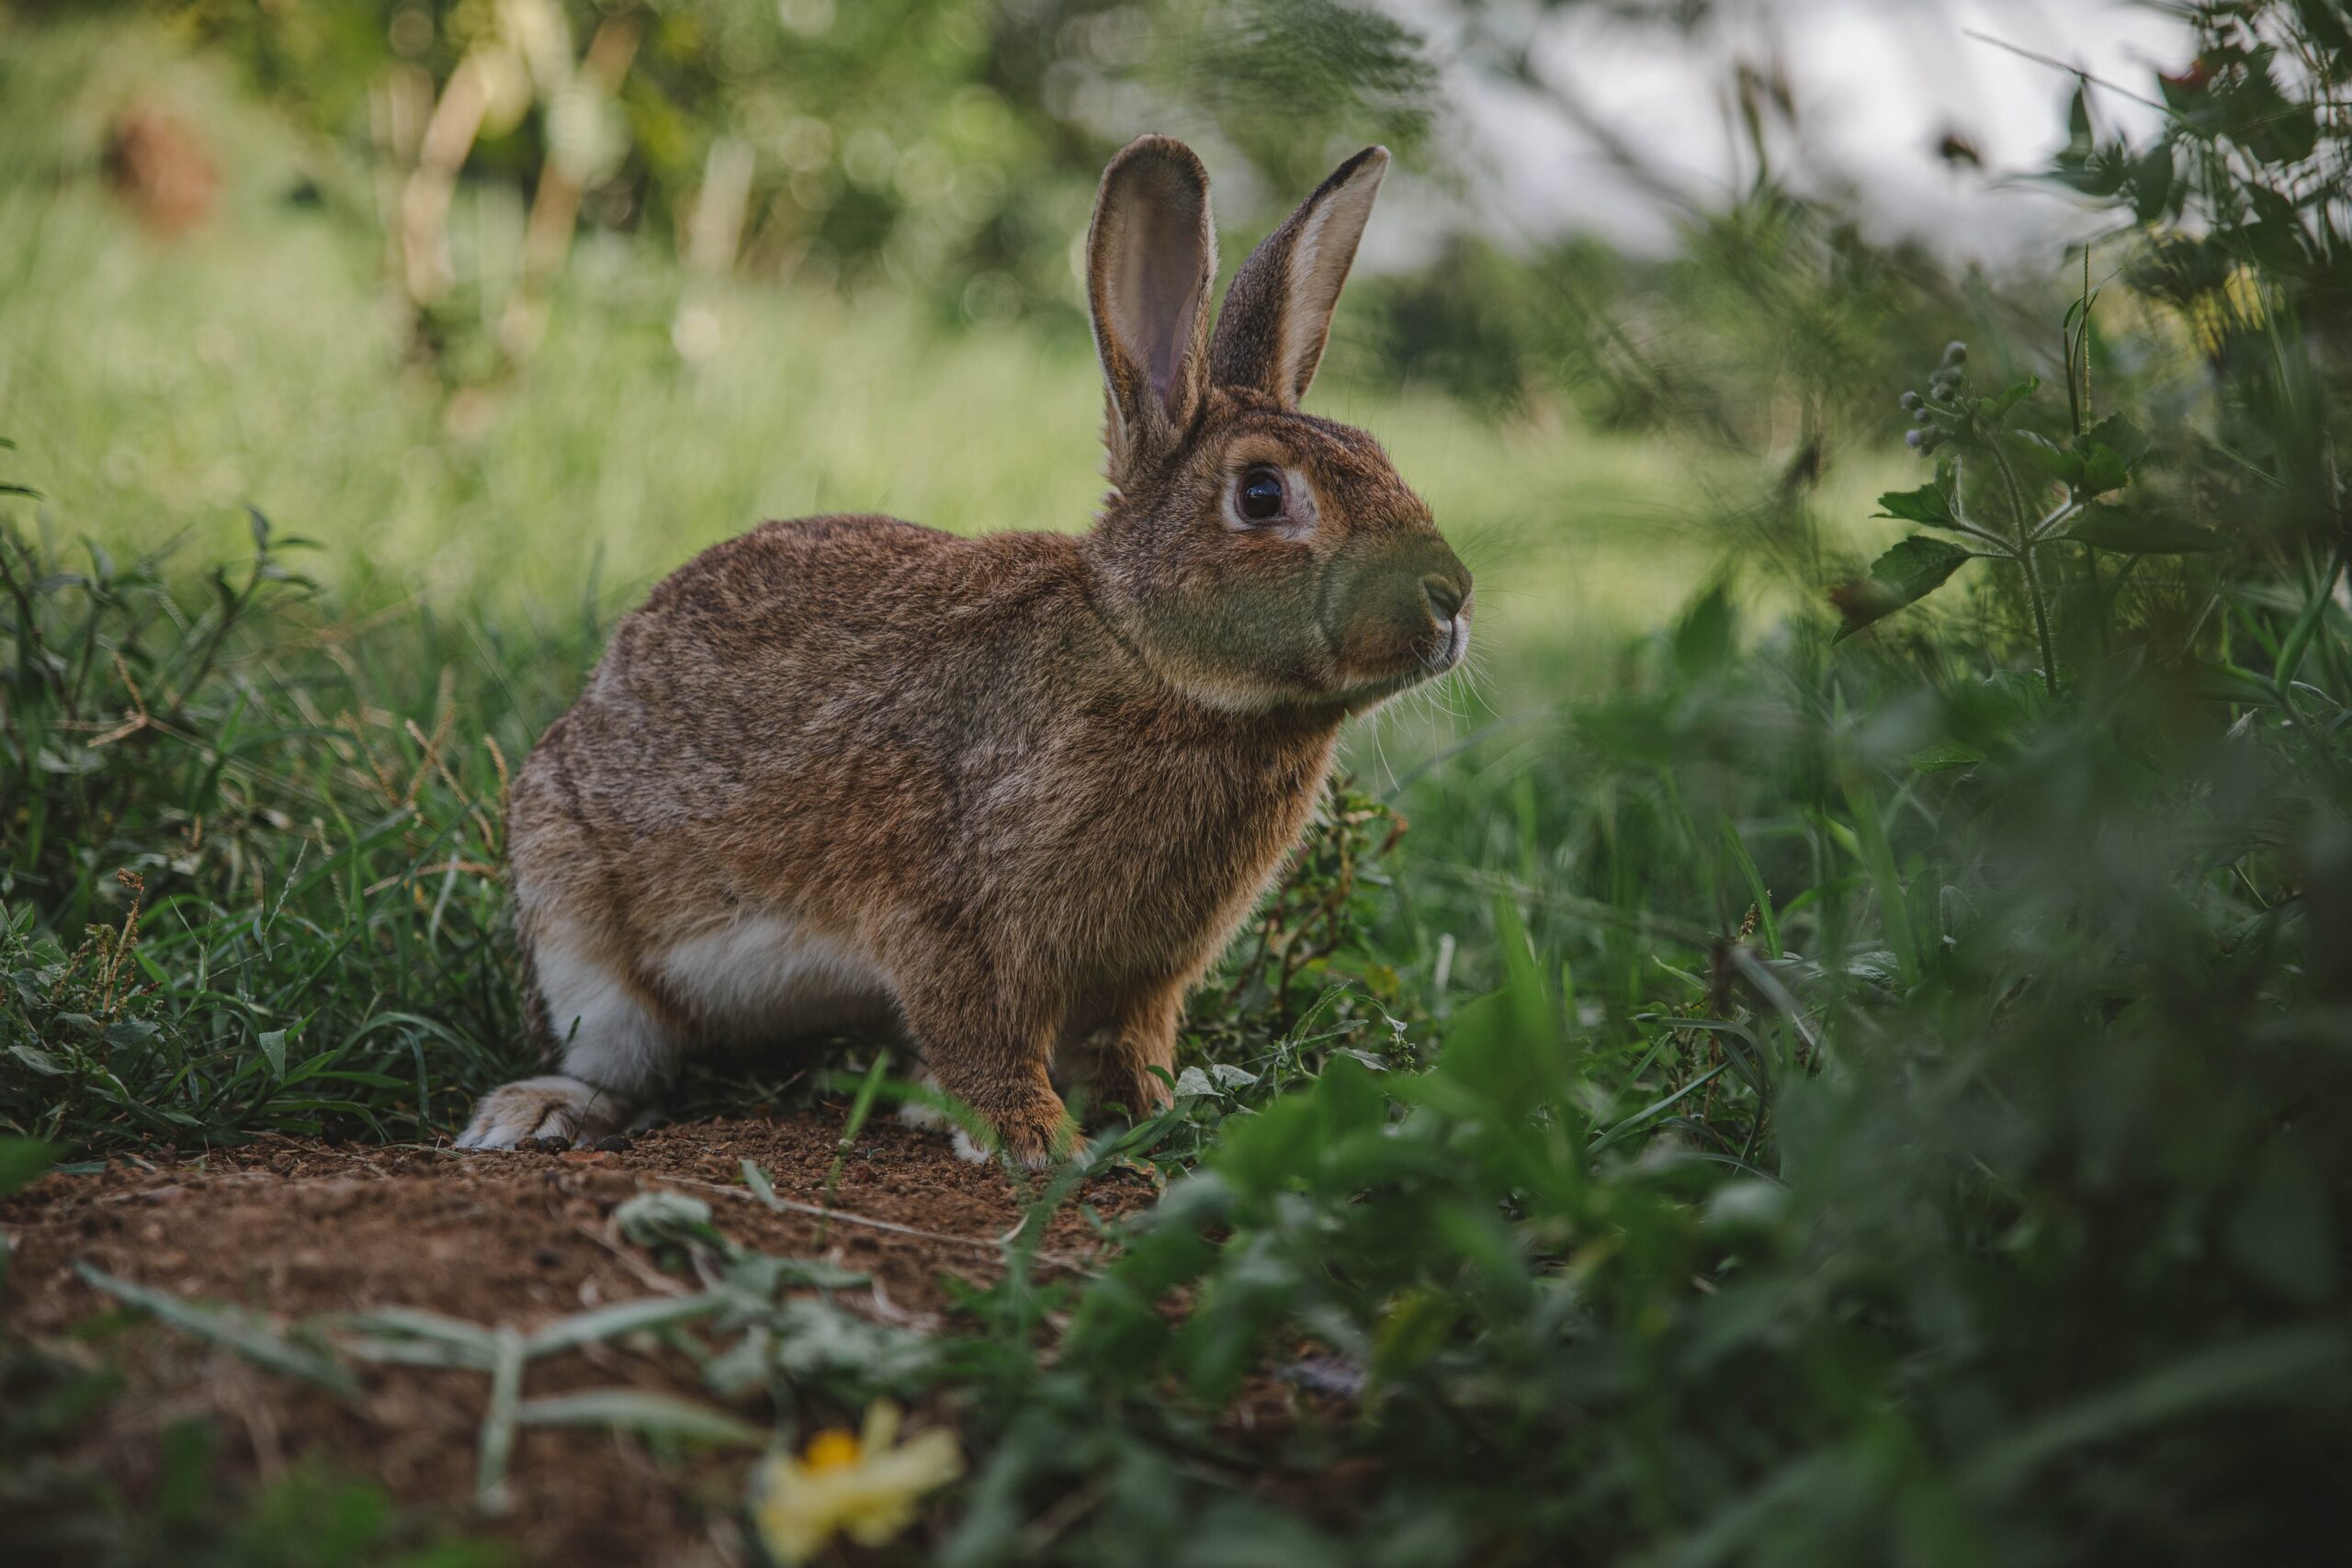 Photo by Denniz Futalan: https://www.pexels.com/photo/a-close-up-shot-of-a-brown-rabbit-5049271/